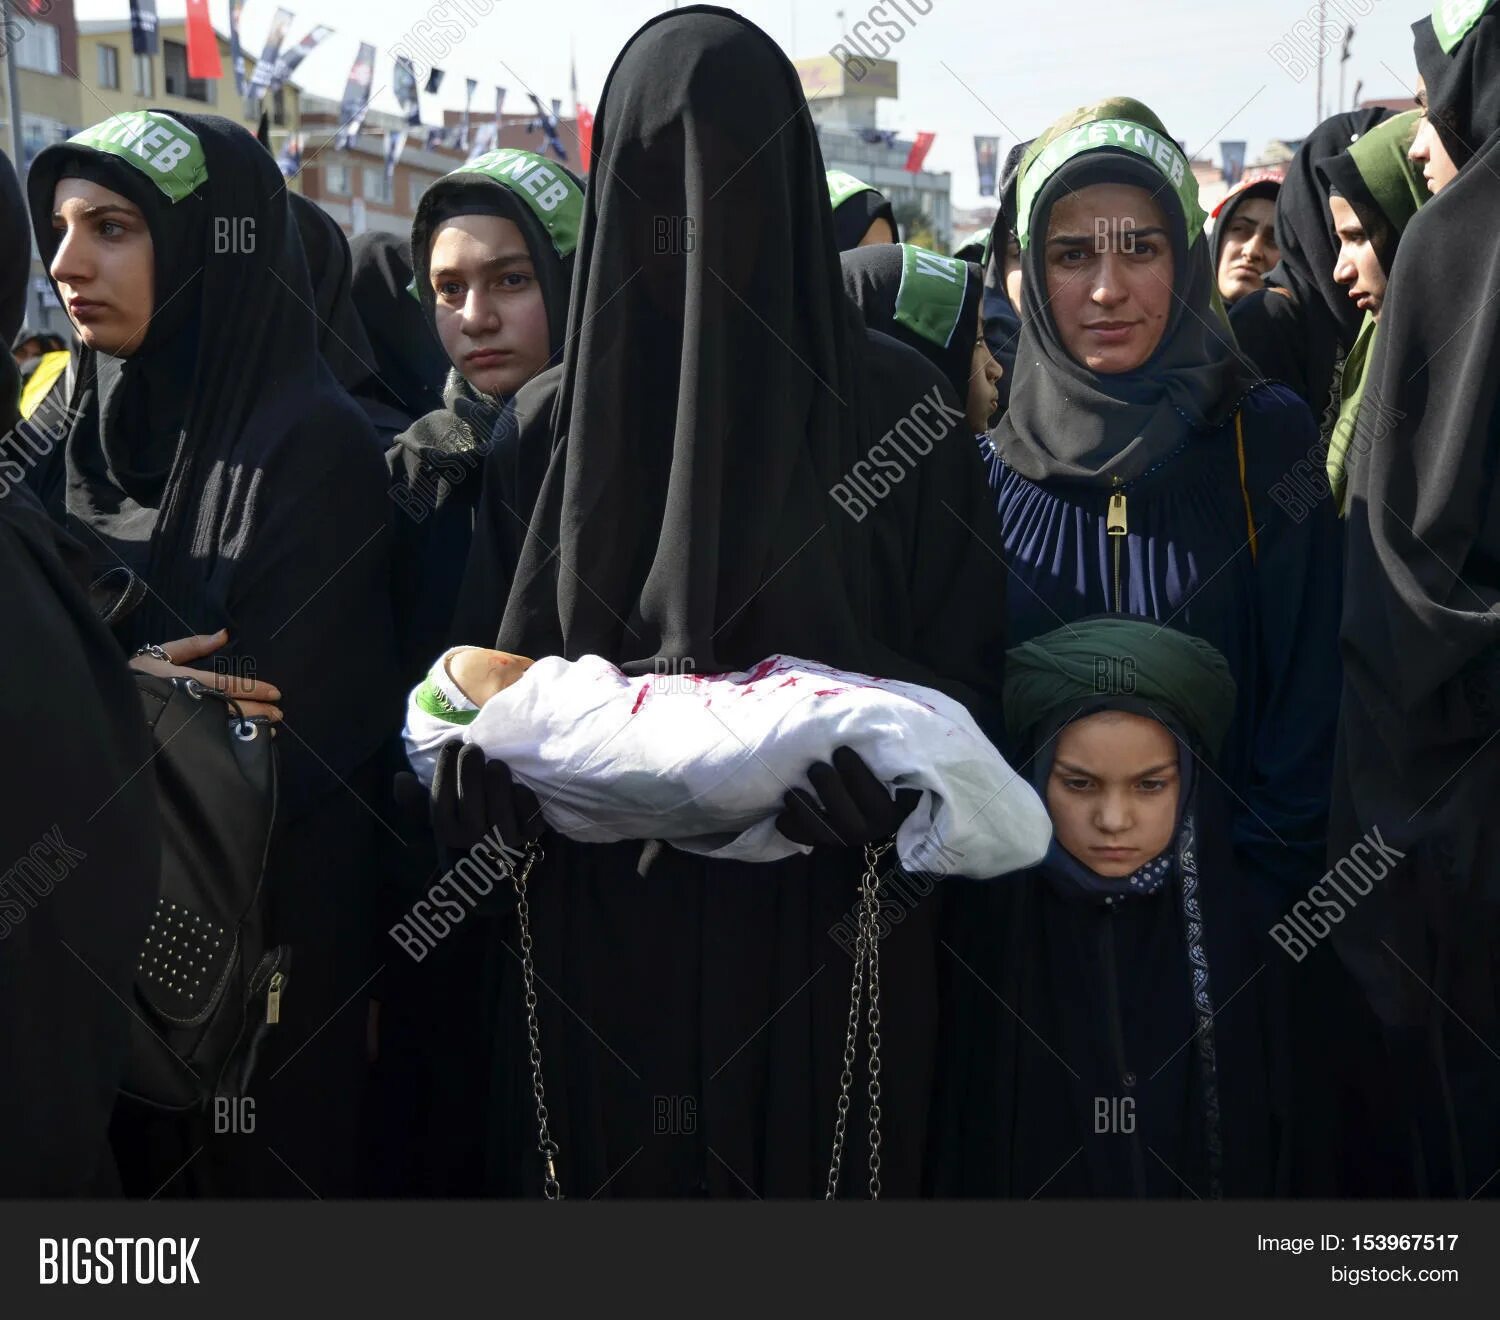 Траур в исламе. Мусульманка в трауре. Траурная одежда для женщин у мусульман. Одежда для похорон женщины мусульманки.